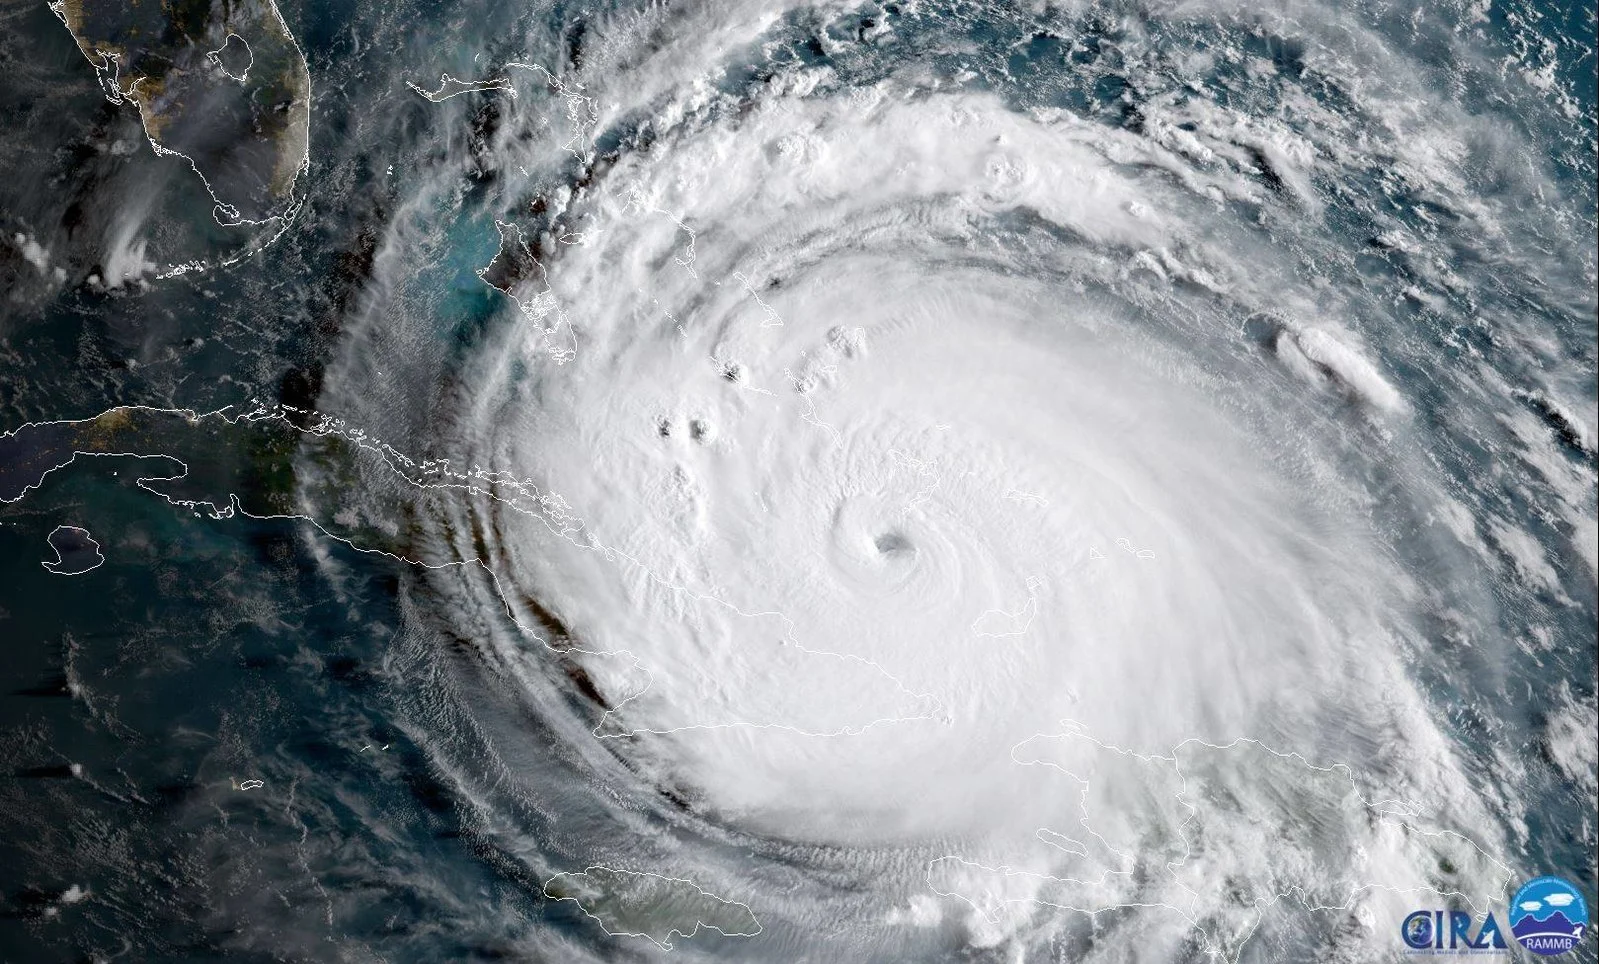 1599px-Geocolor Image of Hurricane Irma